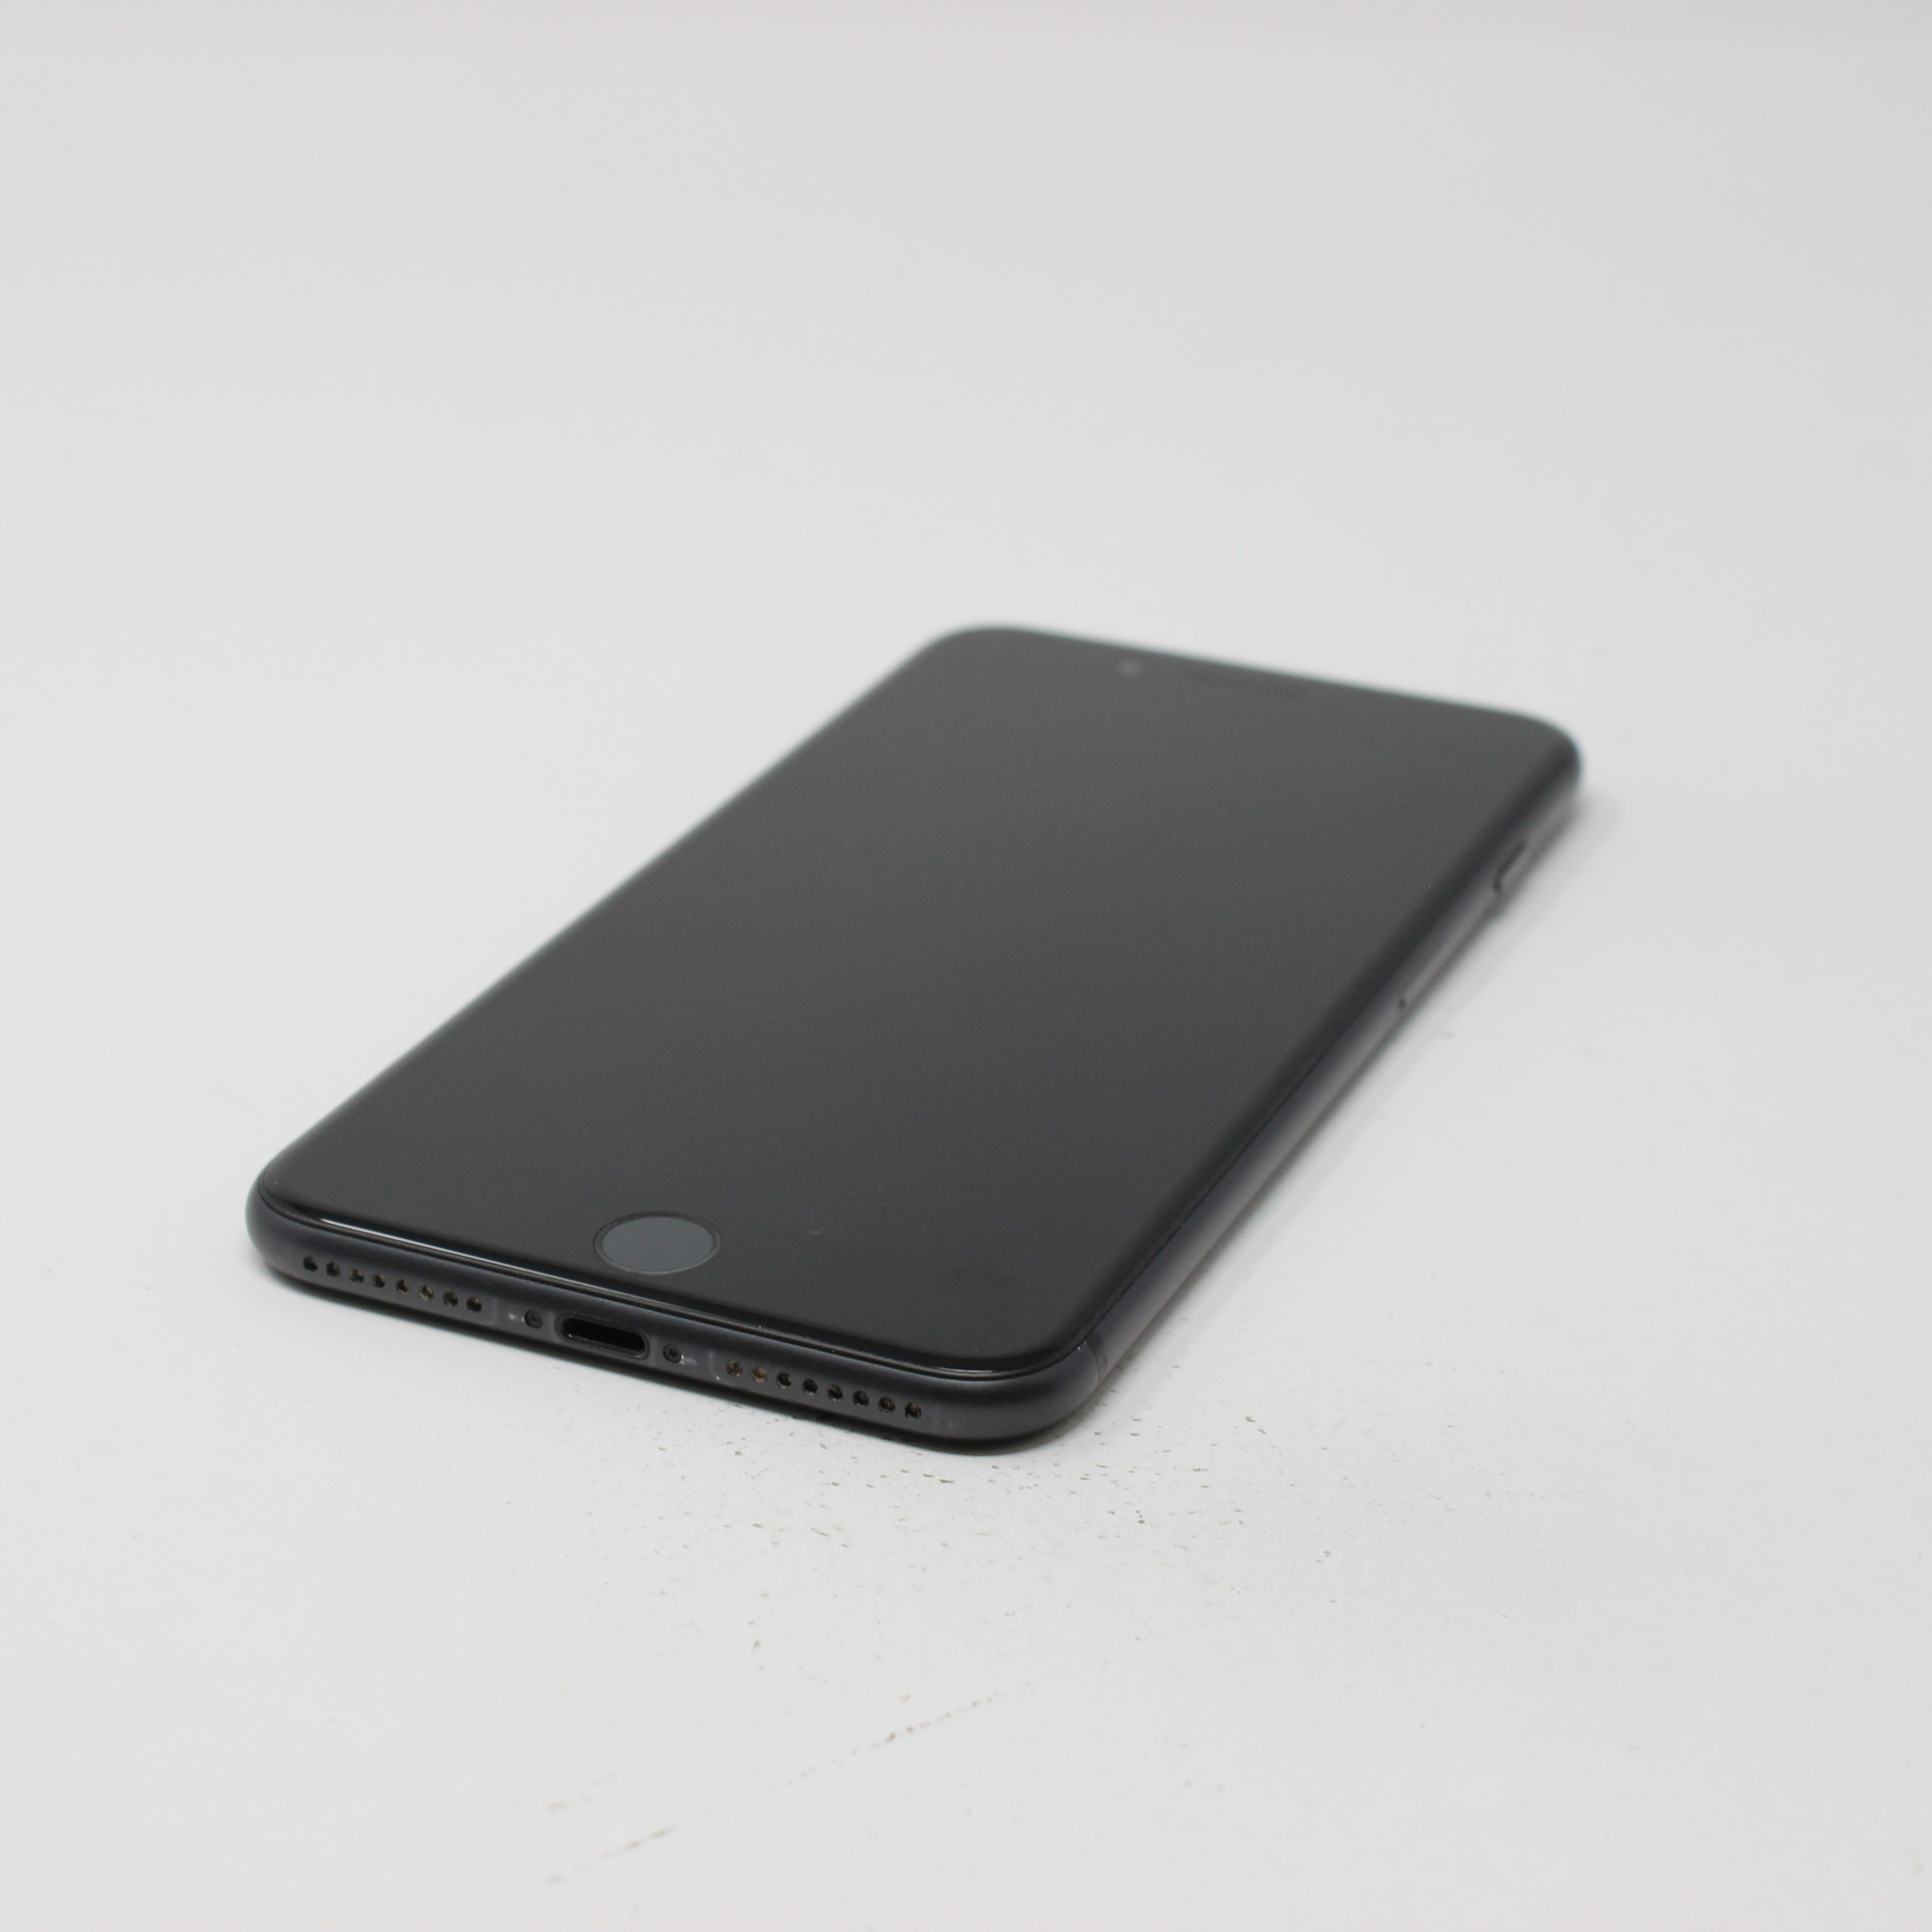 iPhone 8 Plus 256GB Space Gray - Unlocked For Sale | UpTradeit.com